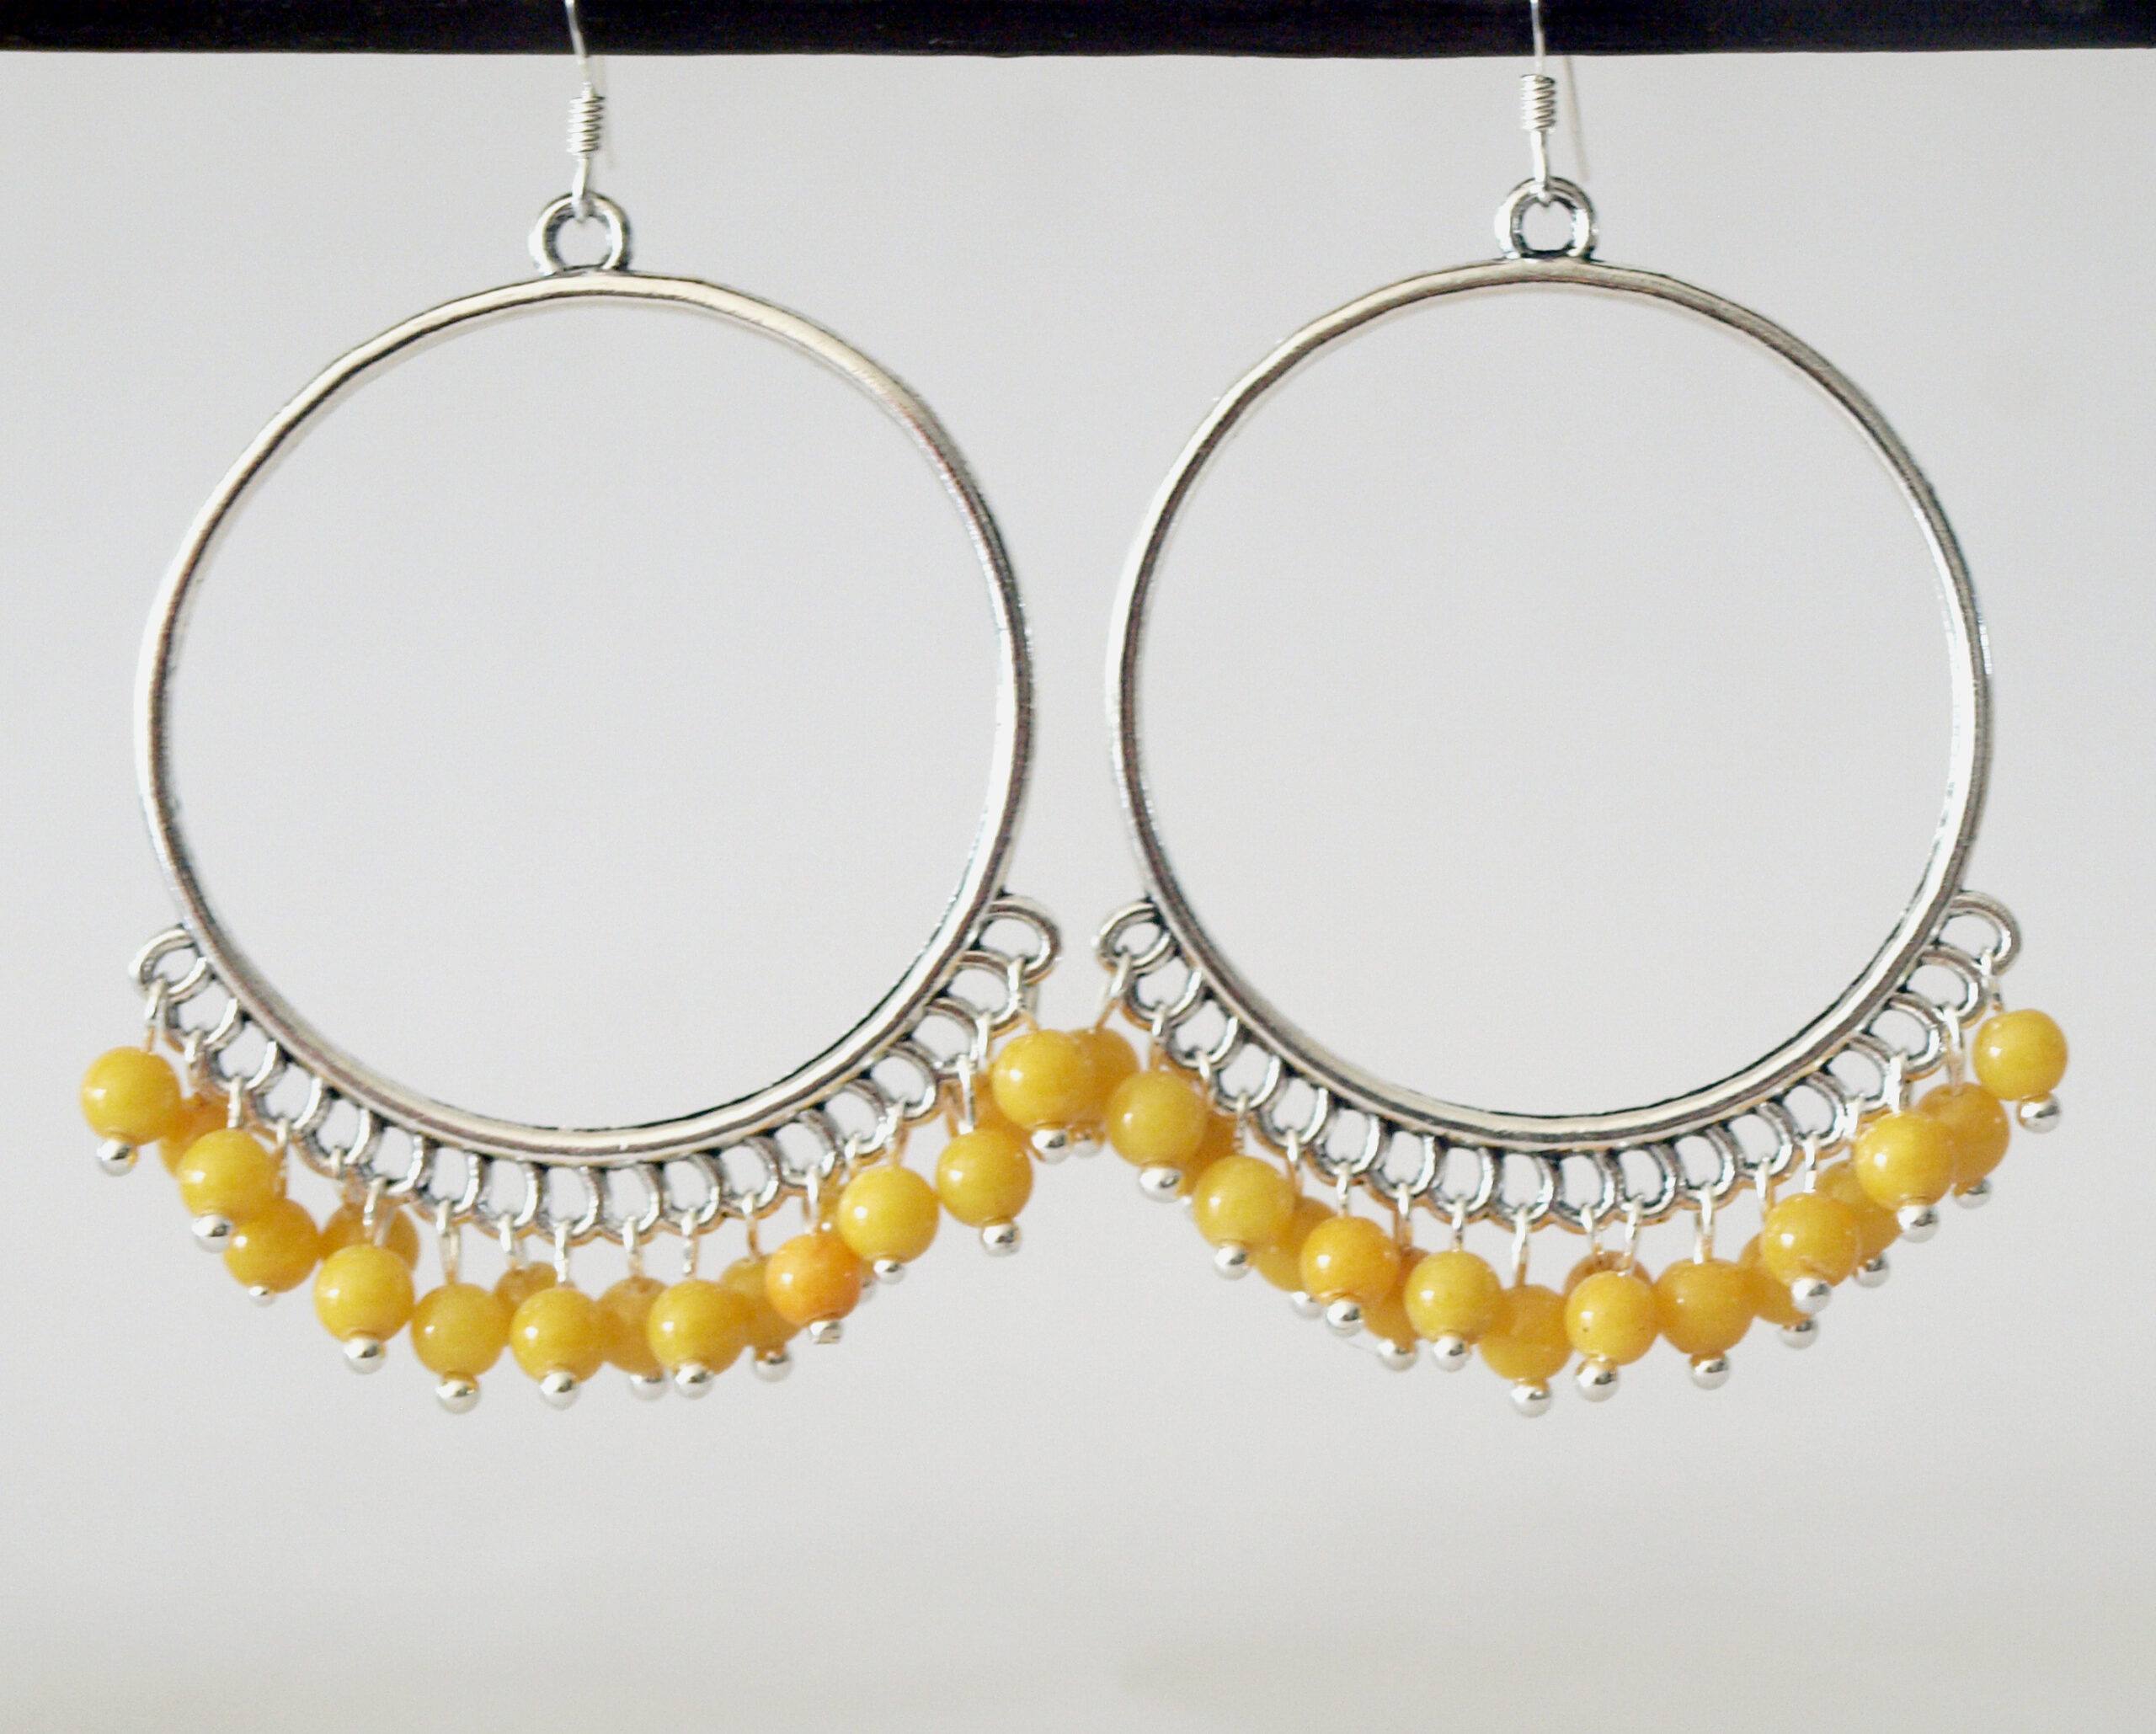 Dazzling yellow earrings for you